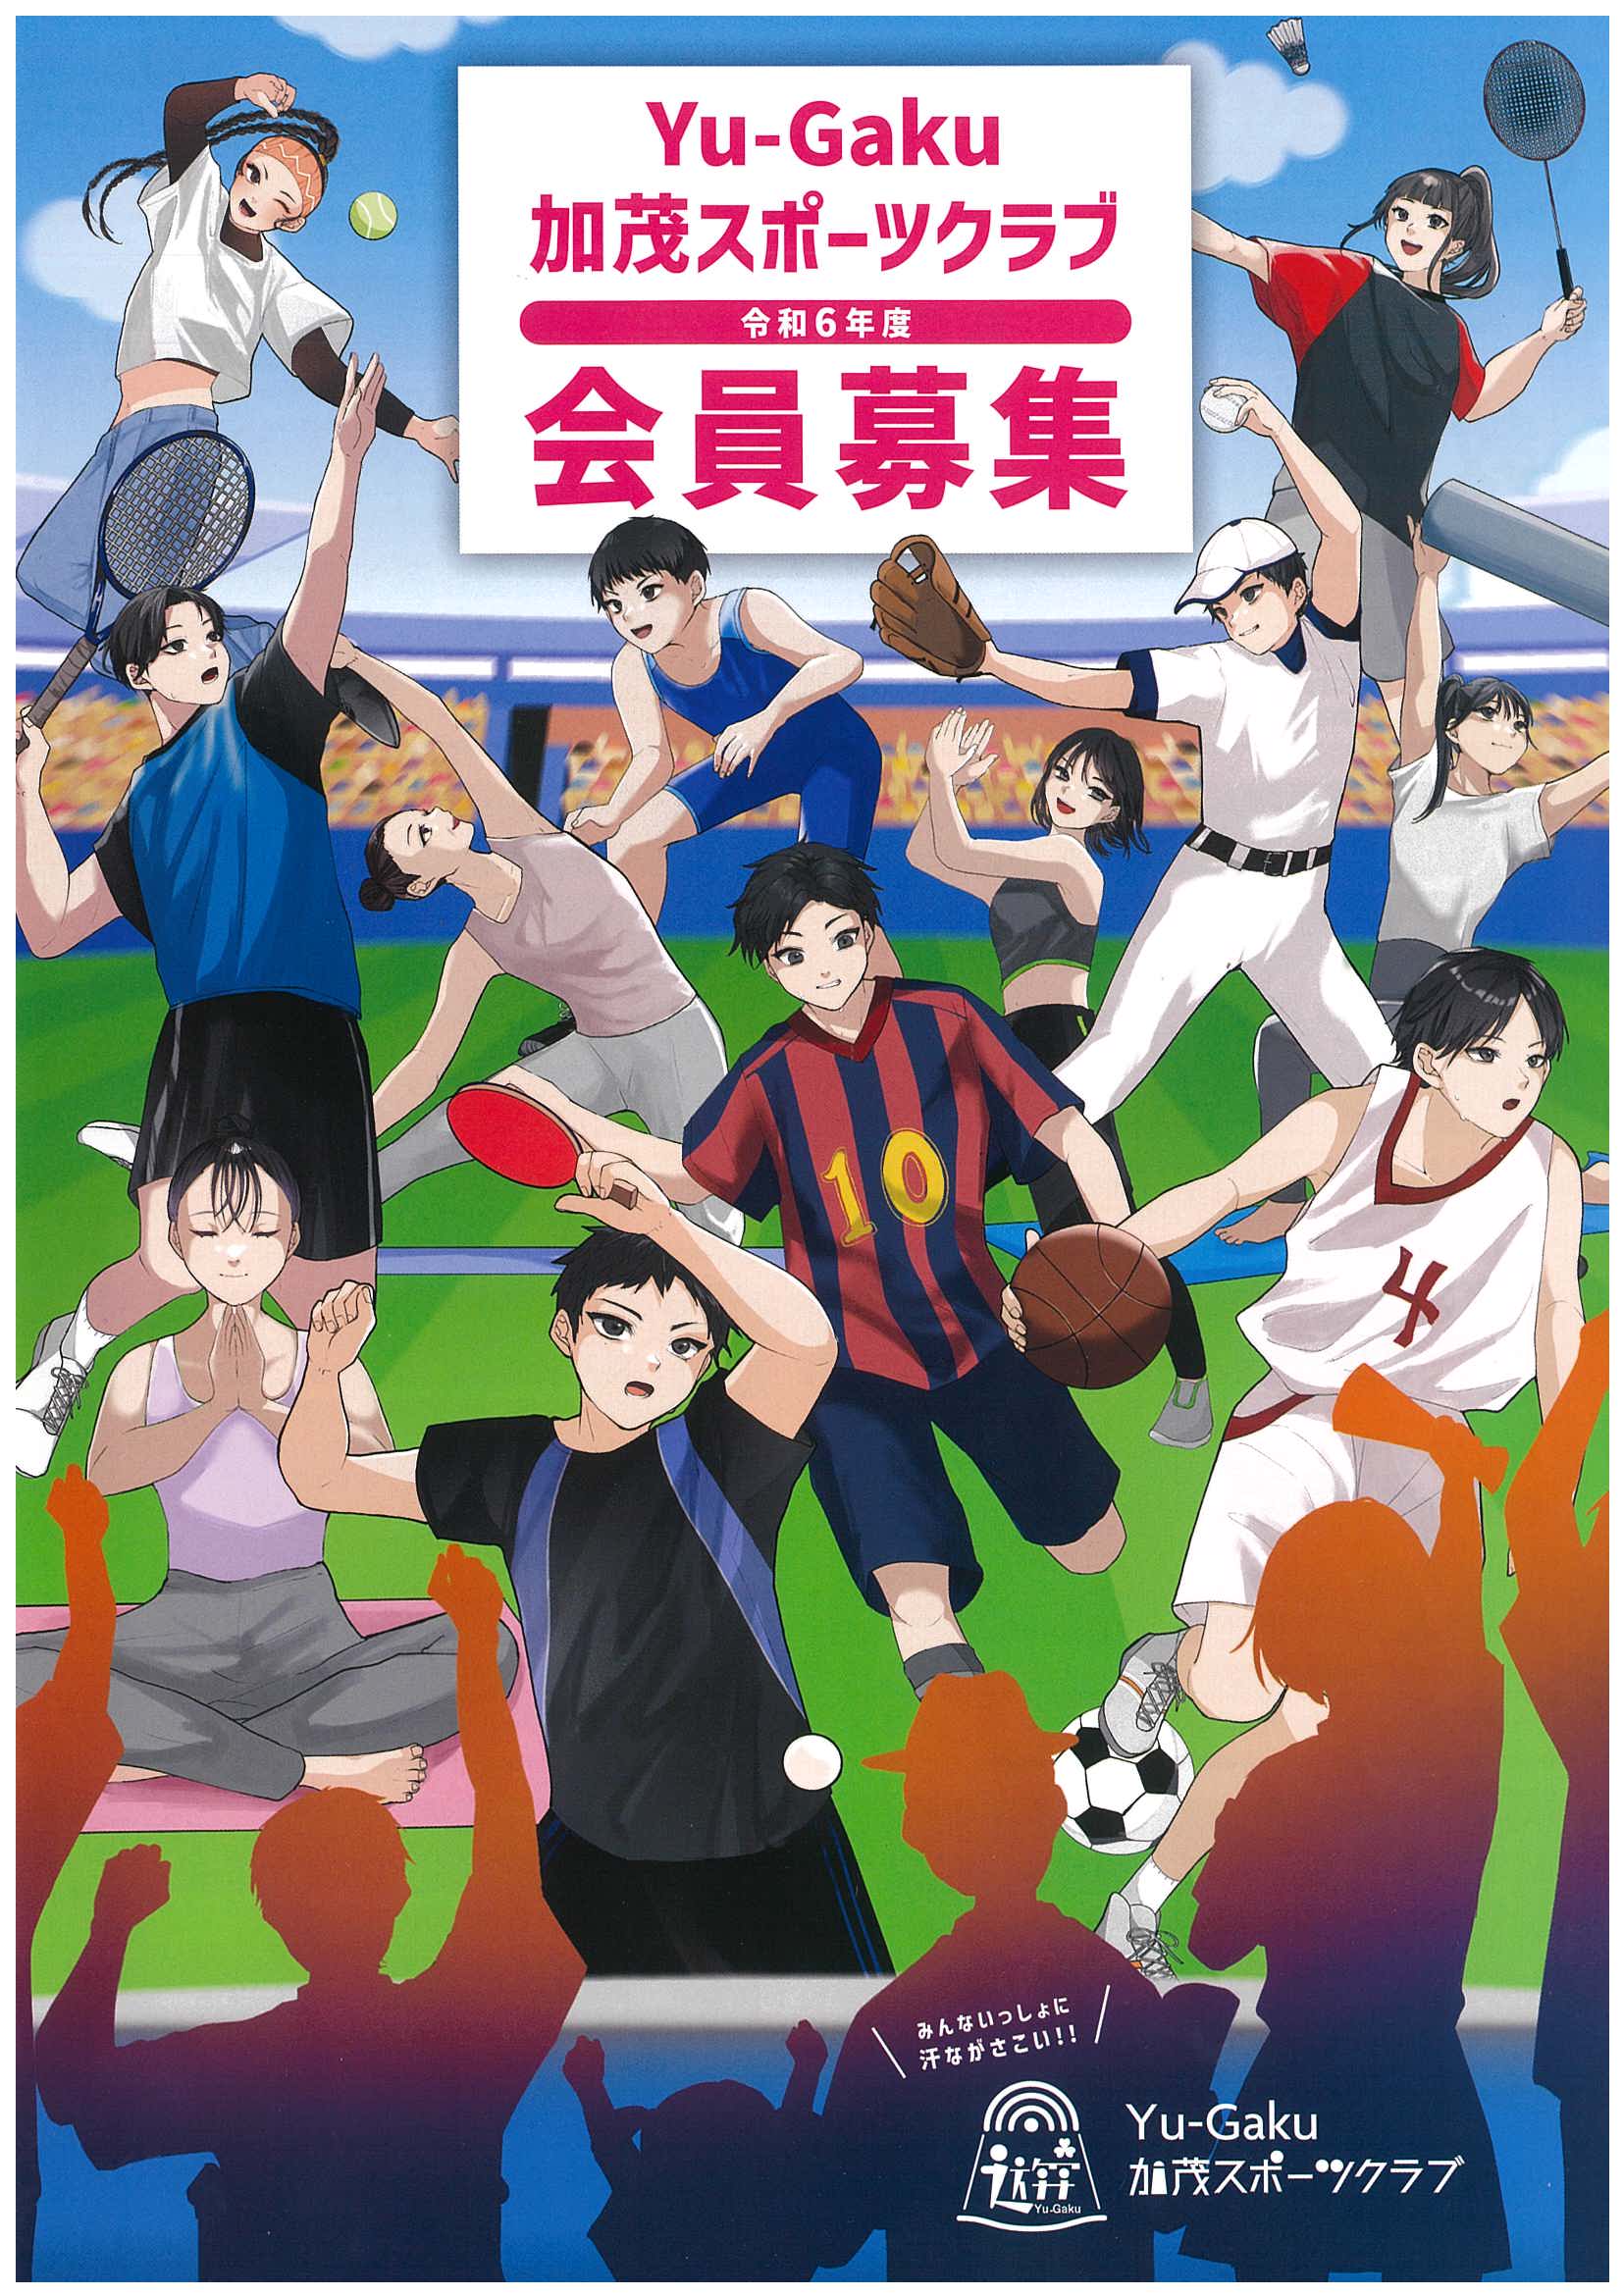 Yu-Gaku加茂スポーツクラブ令和６年度会員募集！